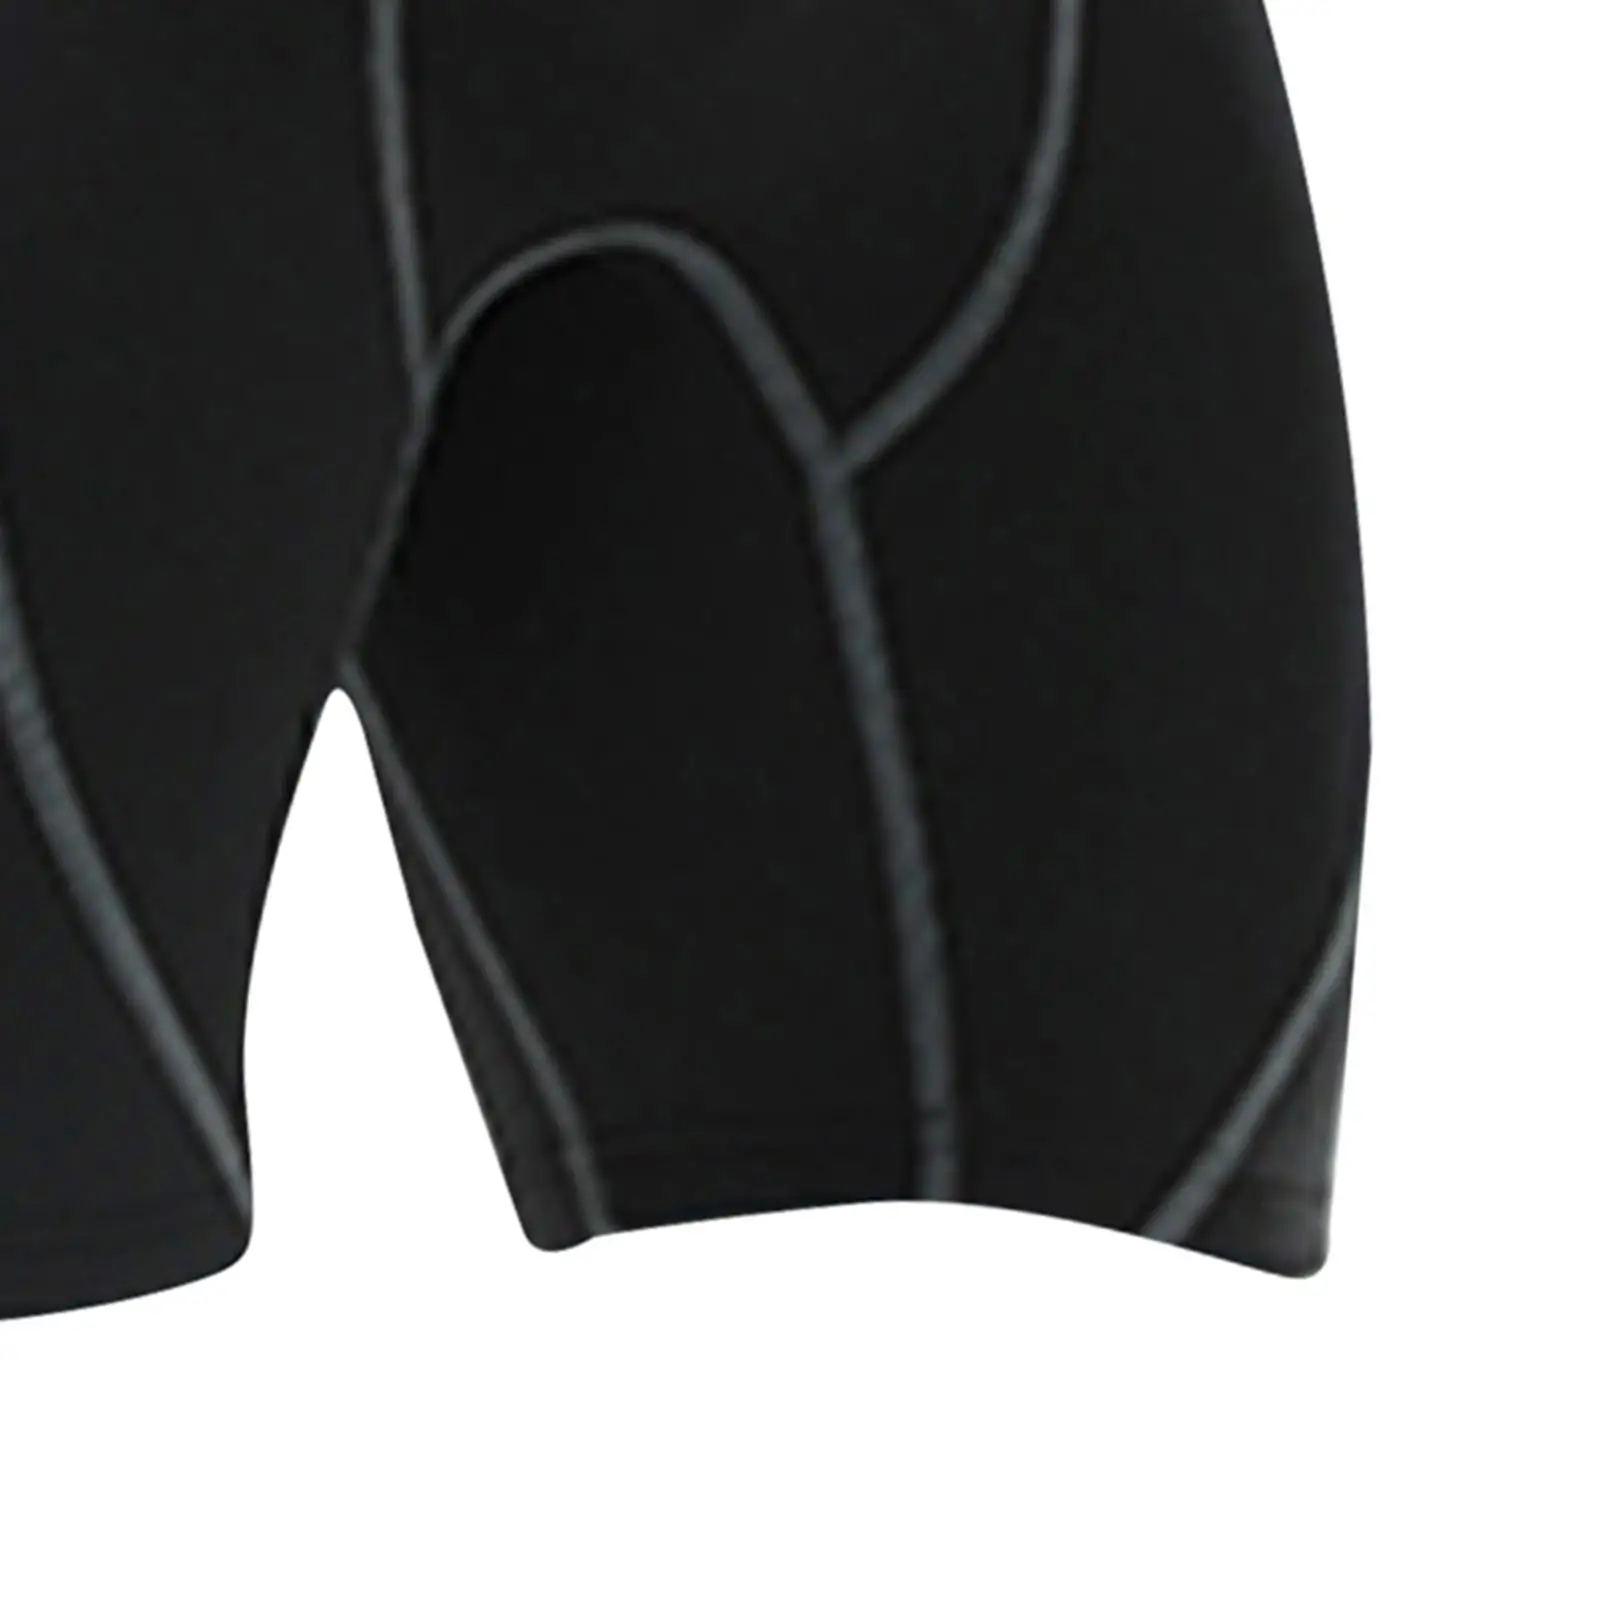 2mm Men Neoprene Shorts Diving Suit Wet Suit Trunks Wetsuit Pants for Kayaking Snorkeling